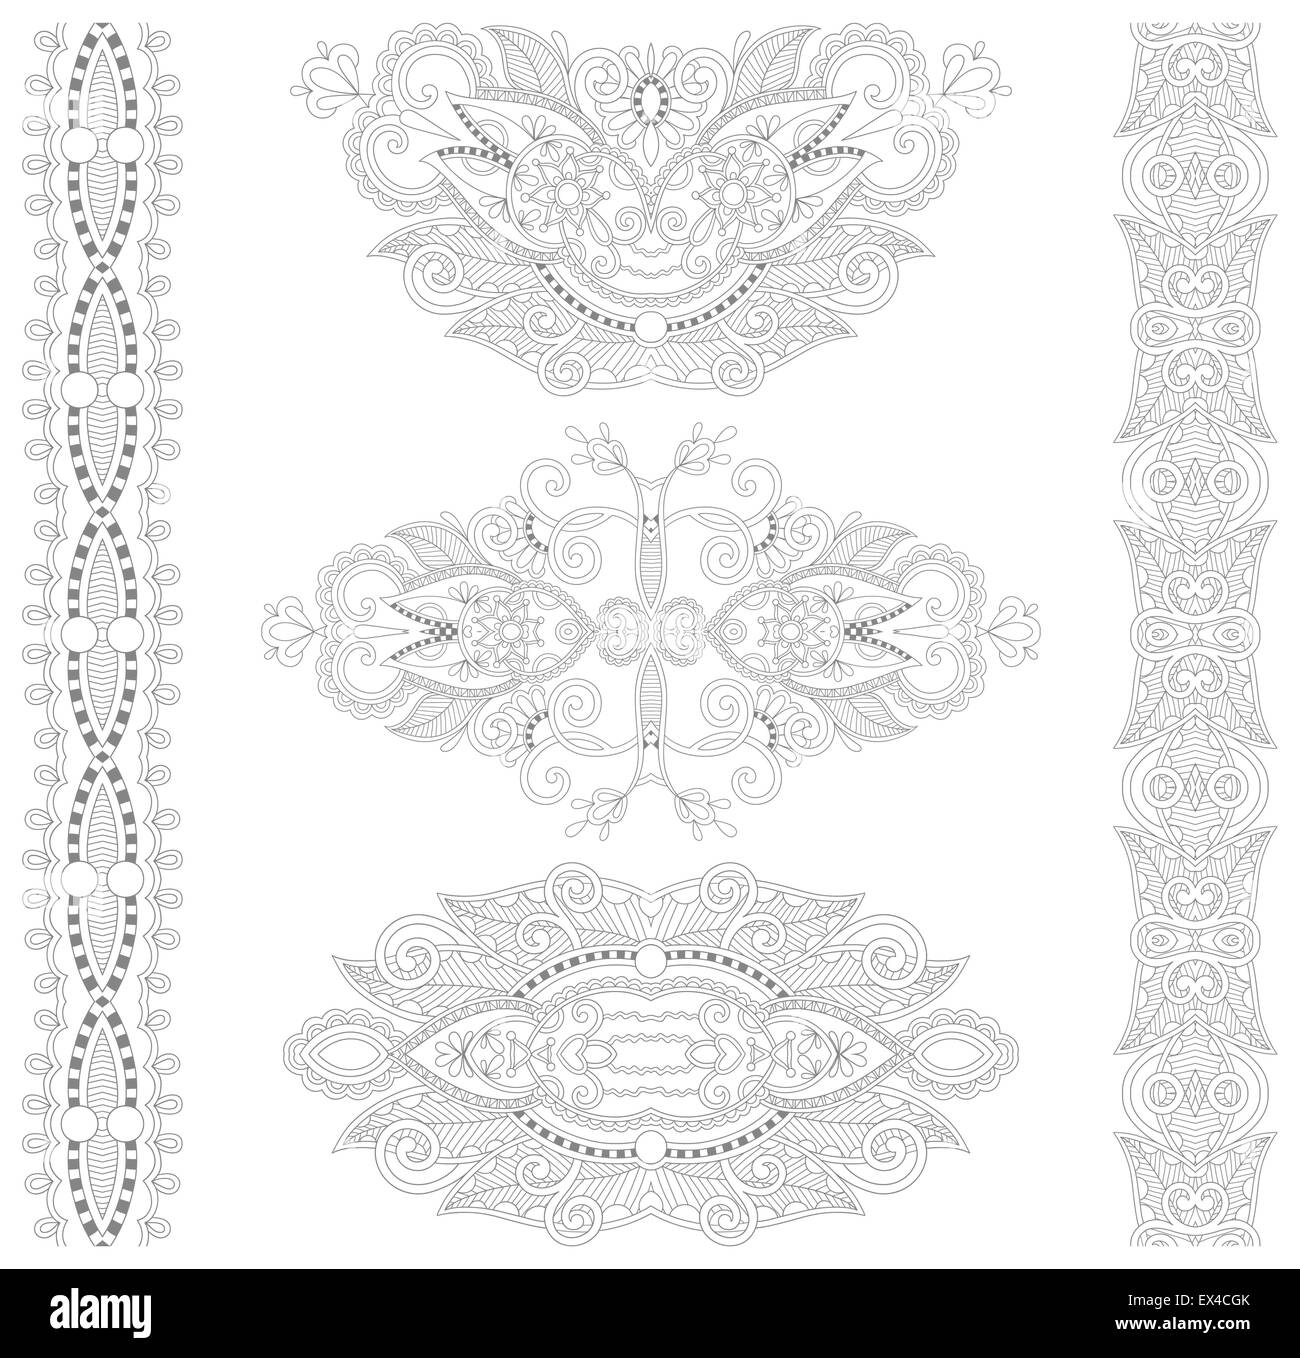 unique coloring book page for adults - floral authentic carpet d Stock Vector